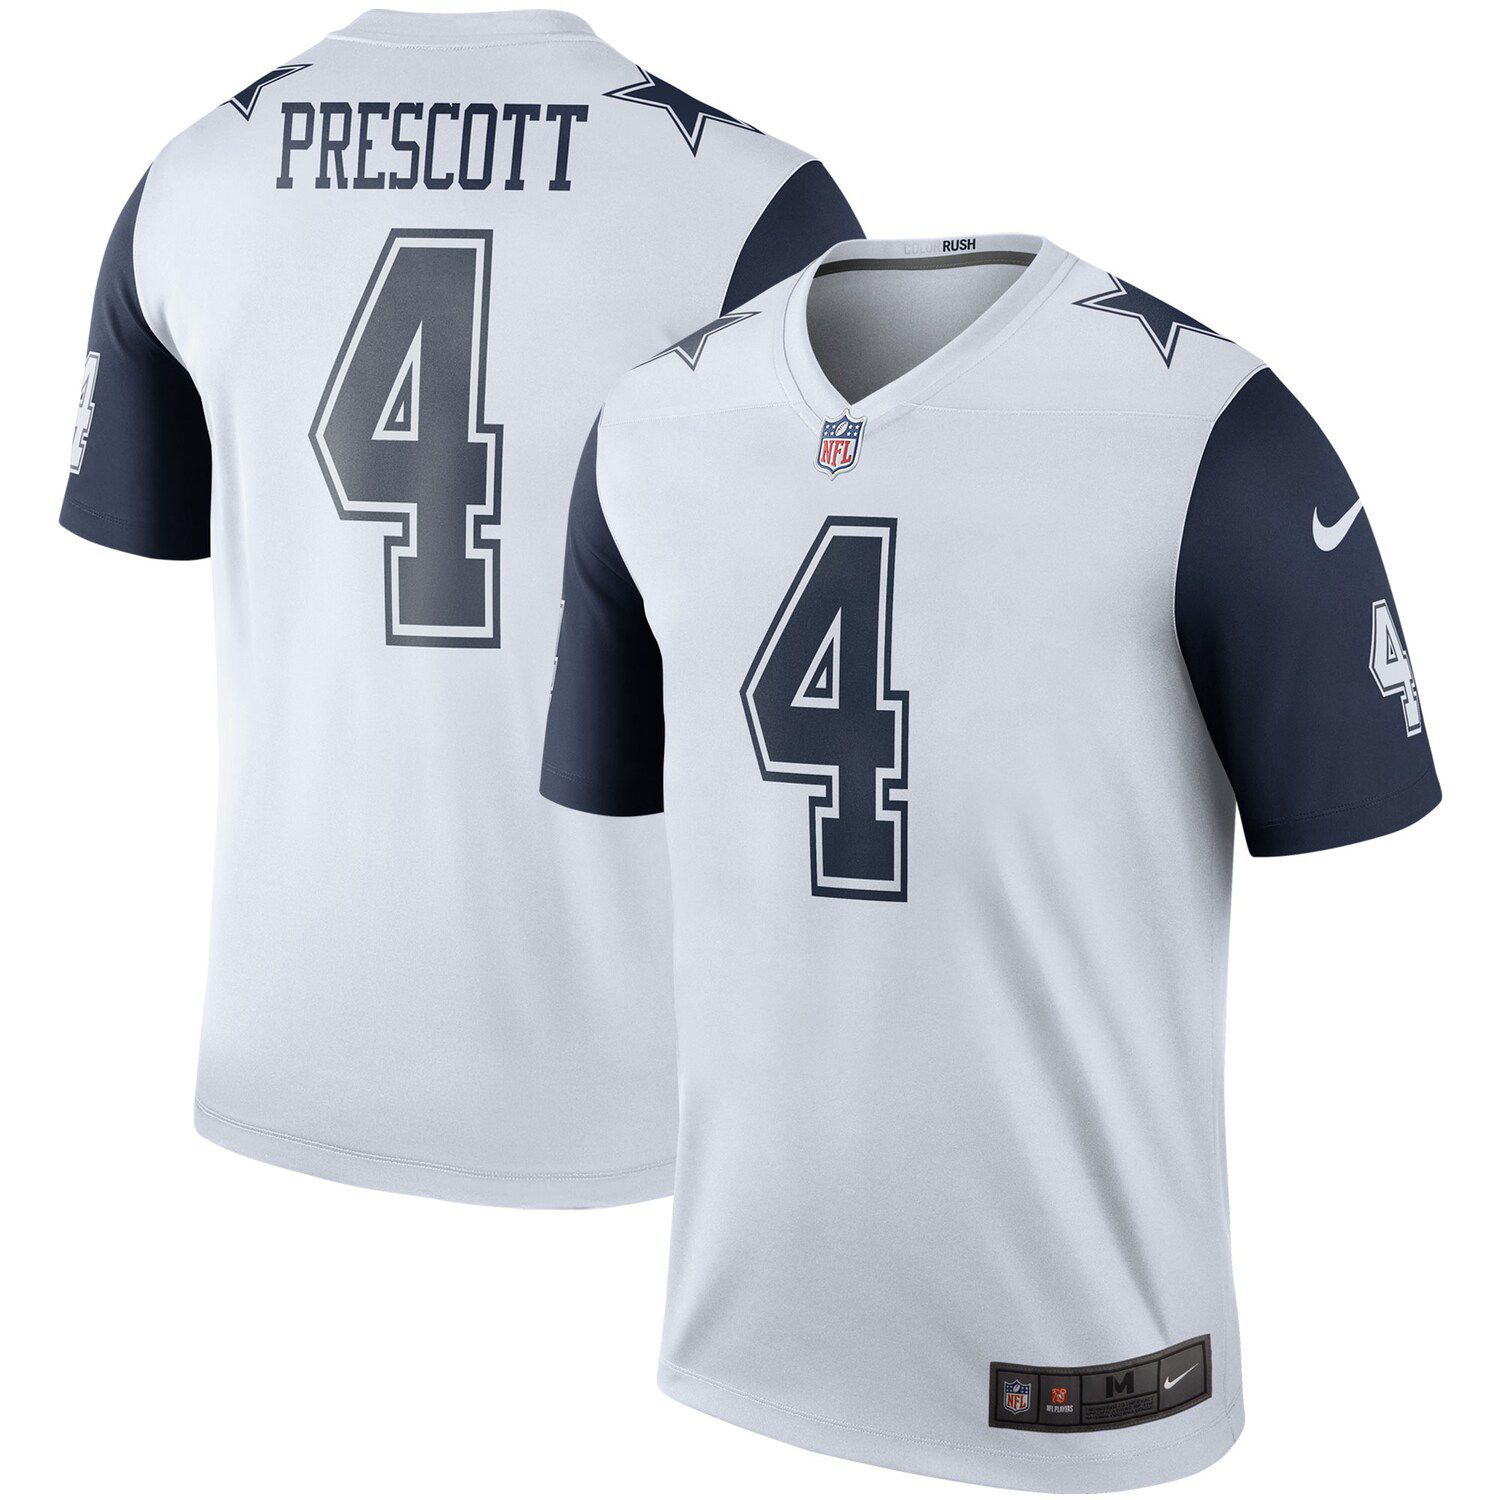 prescott cowboys jersey